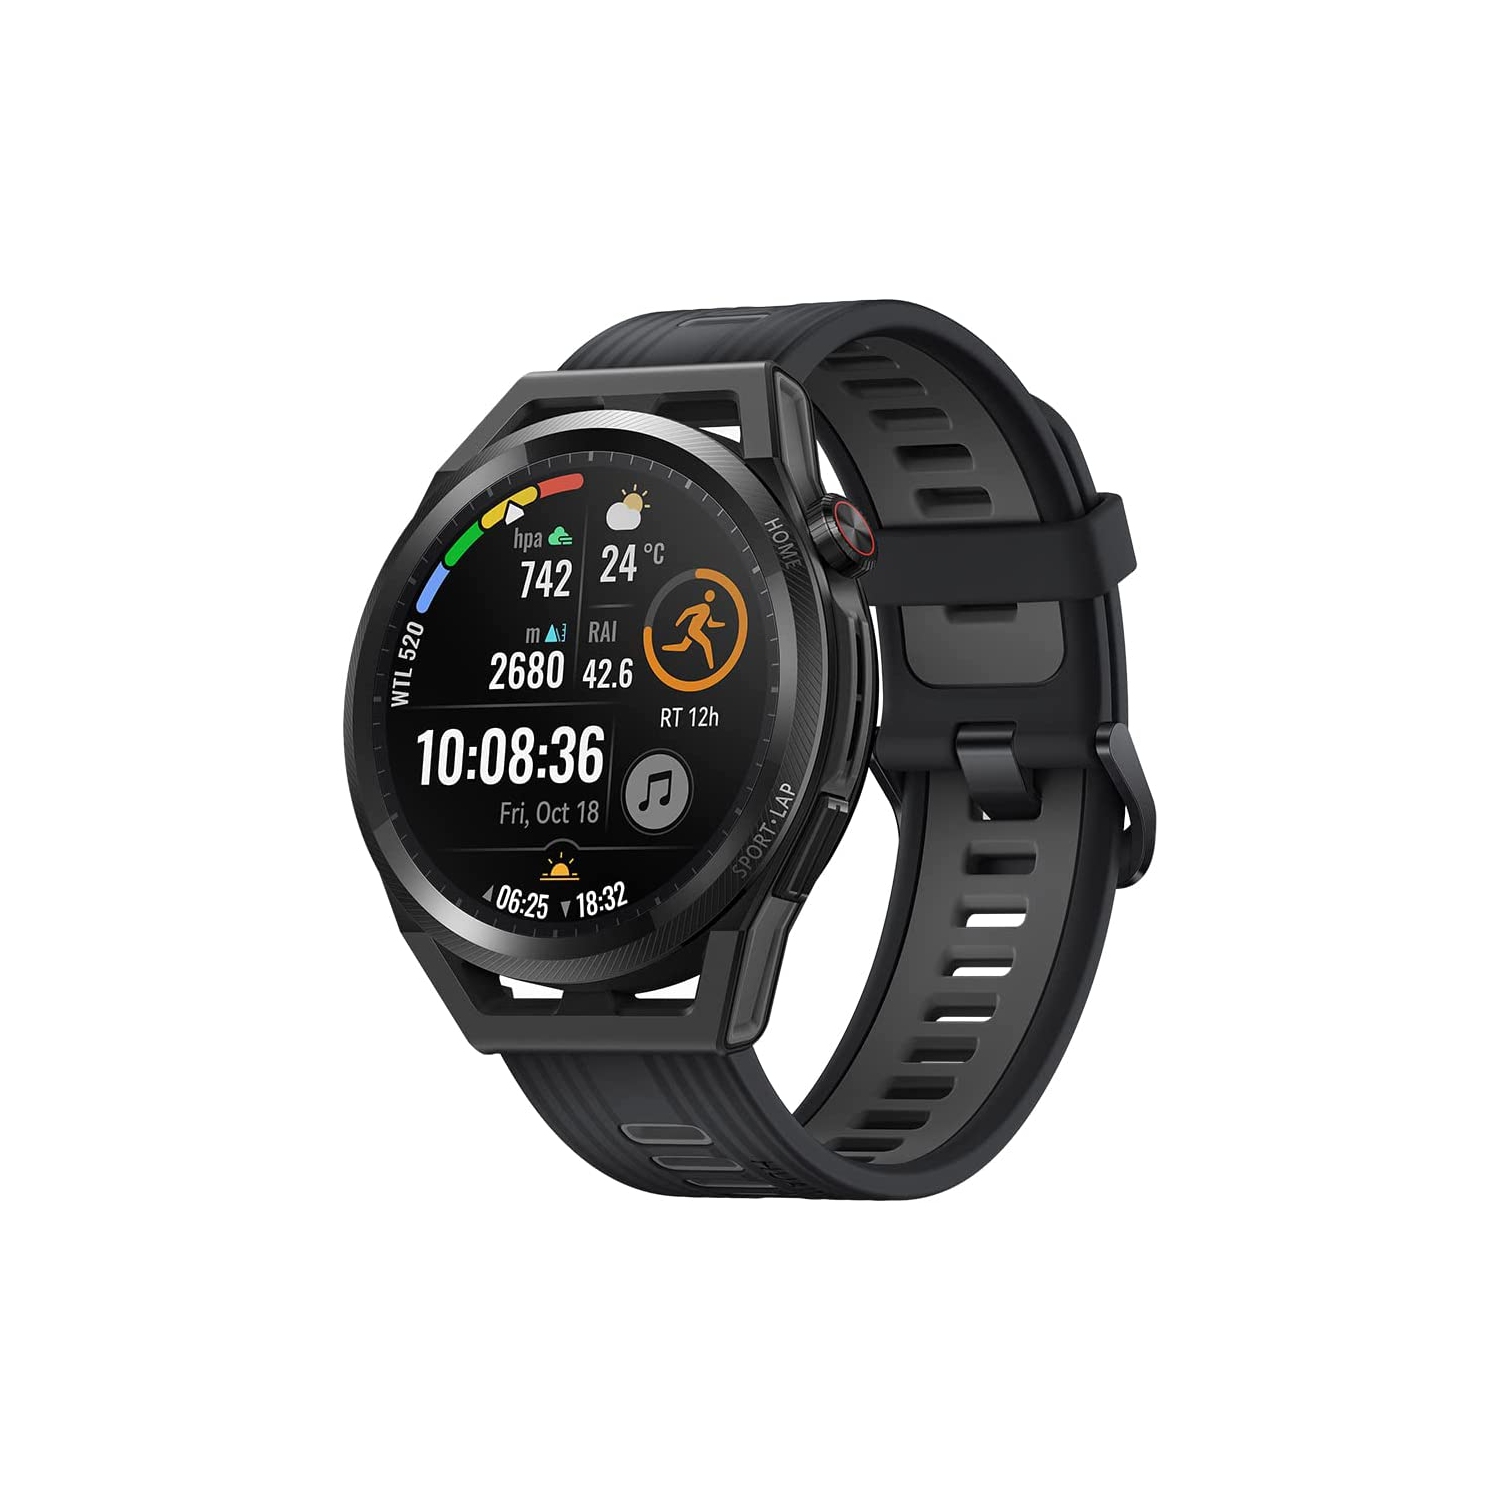 HUAWEI Watch GT Runner - Real-Time Heart Rate Monitoring, Dual-Band Five-System GNSS, AI Running Coach, Running Program, Lightweight, 2-Week Battery Life